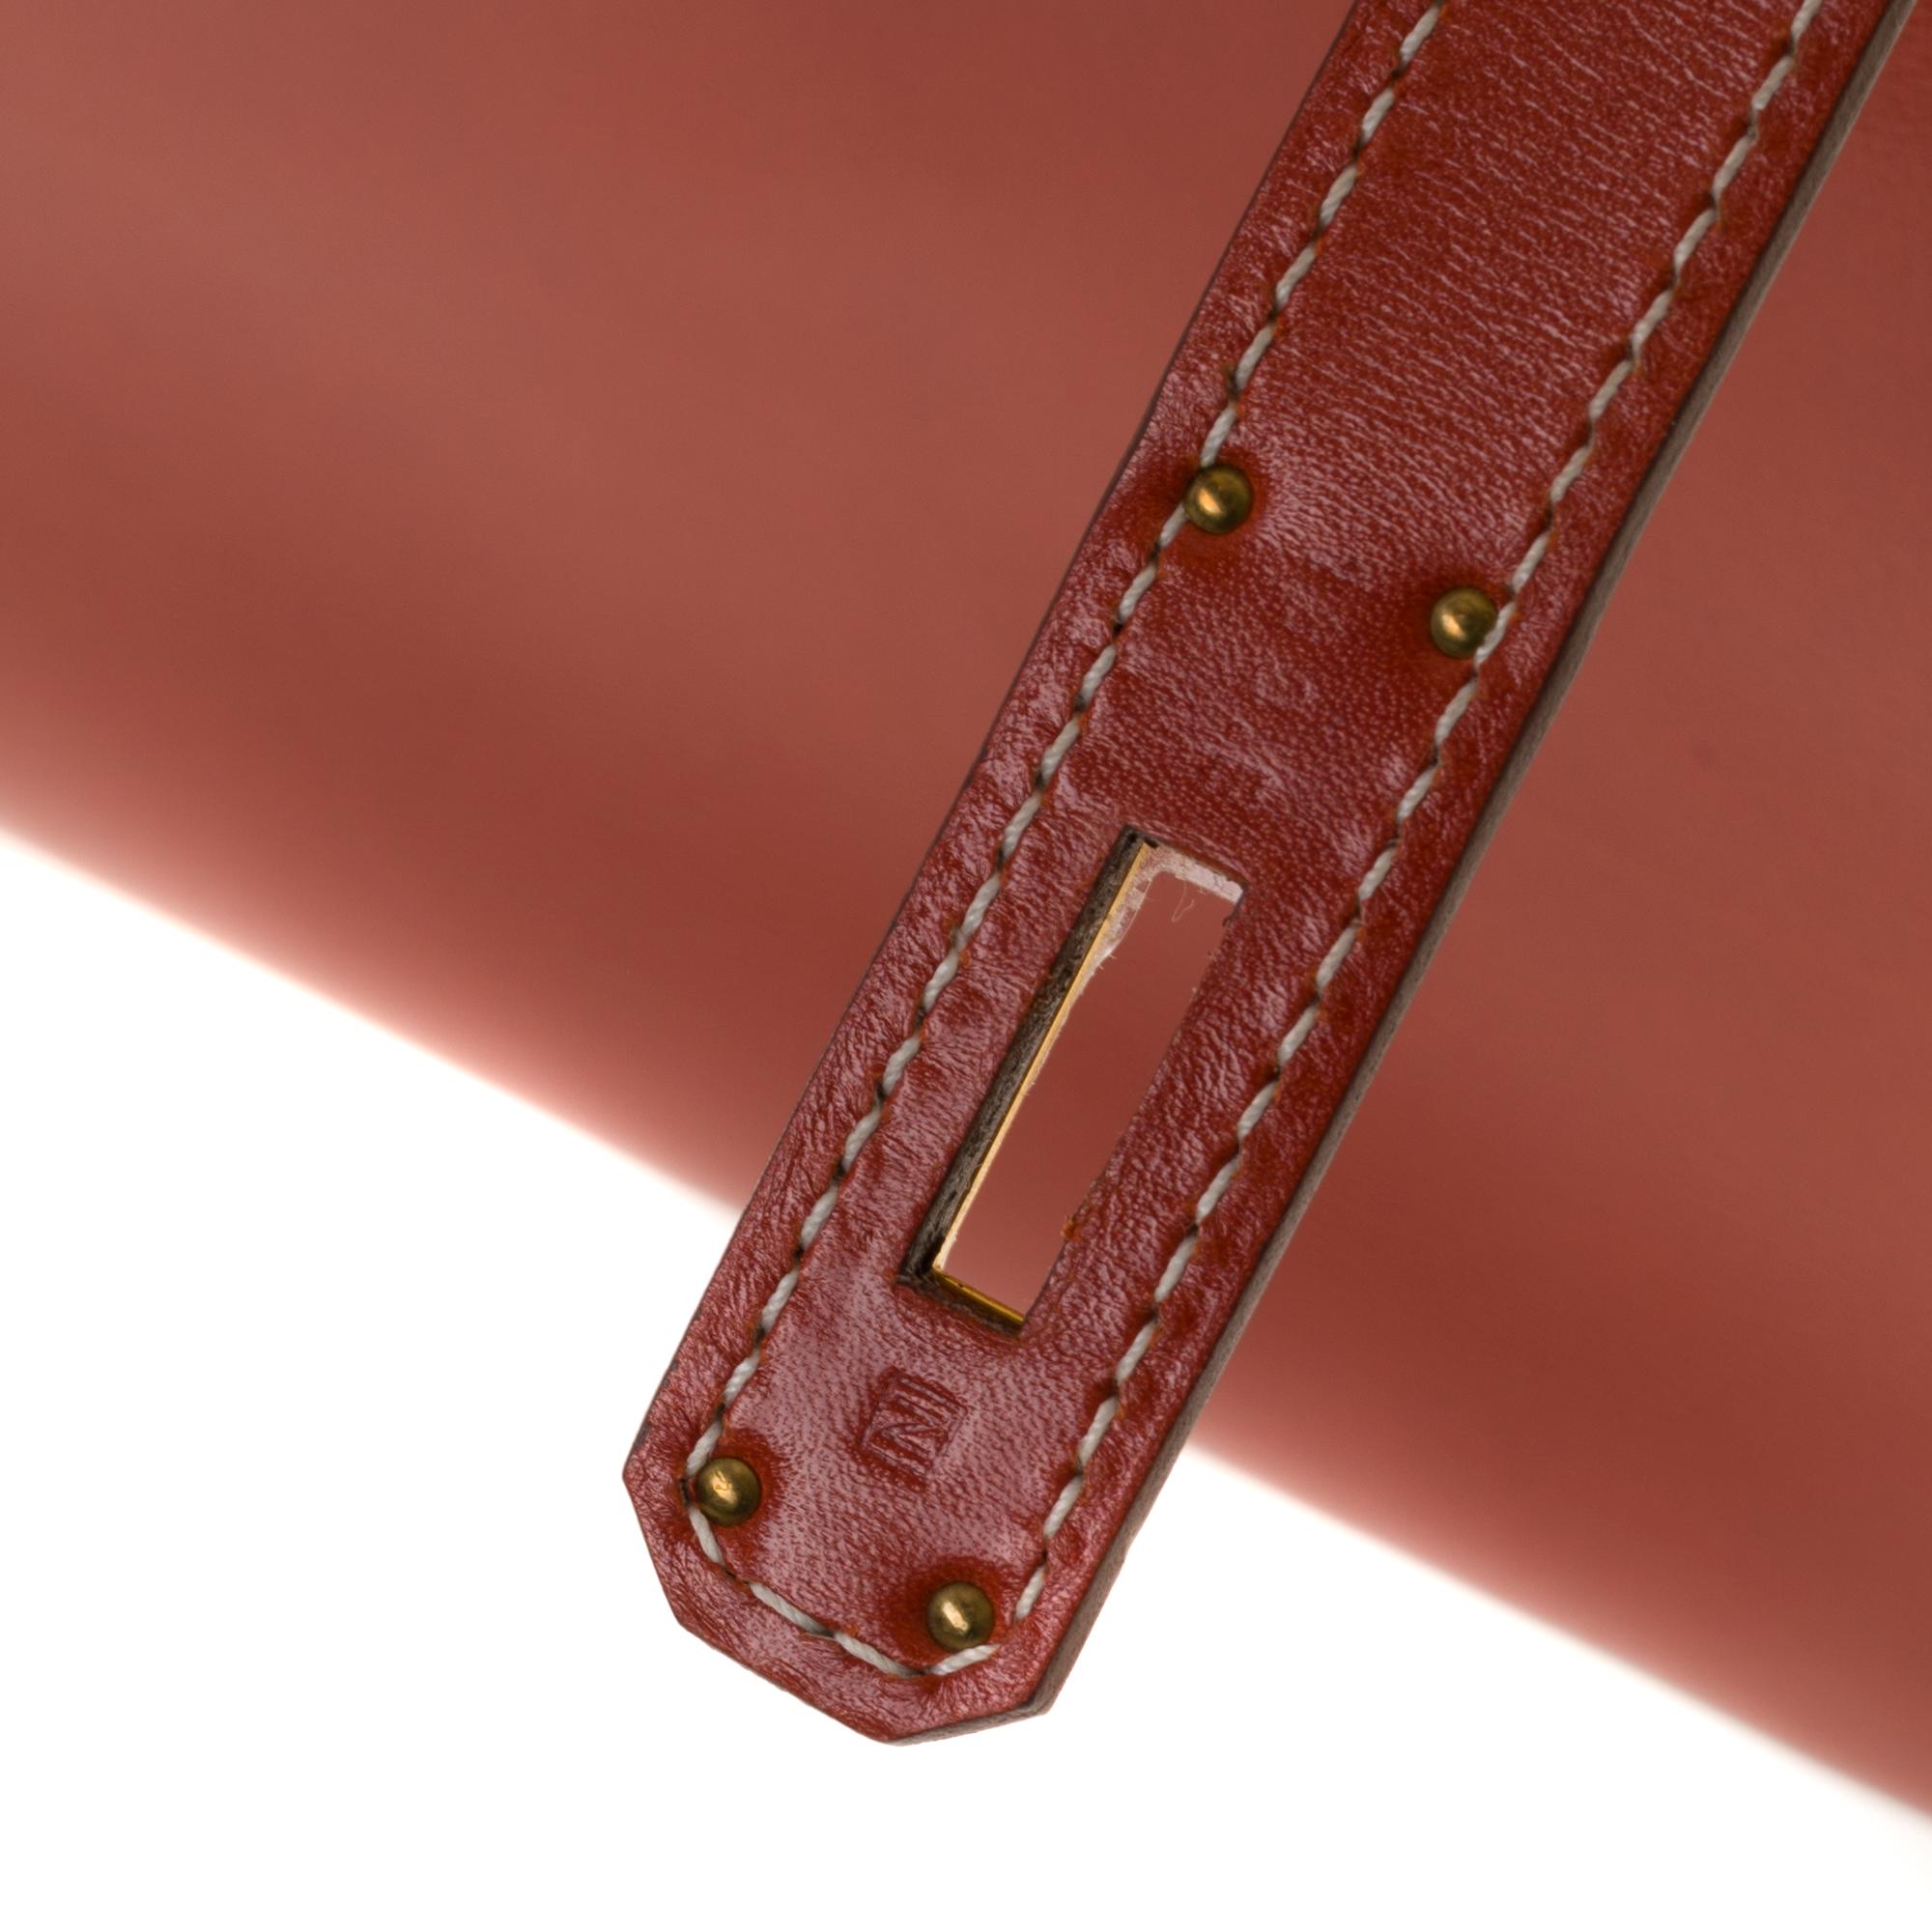 Orange RARE Hermès Birkin 30 handbag in brick box calf leather and gold hardware